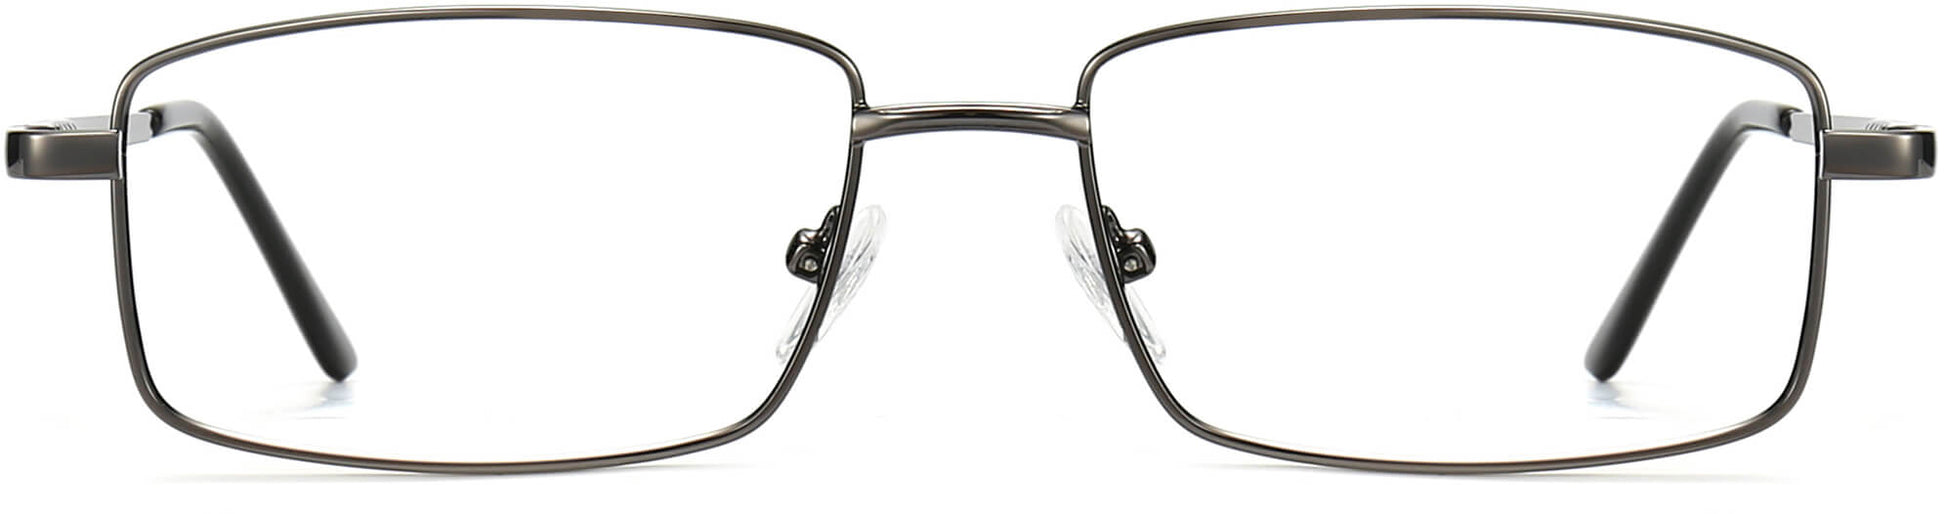 Nikolai Rectangle Gun Color Eyeglasses from ANRRI, front view